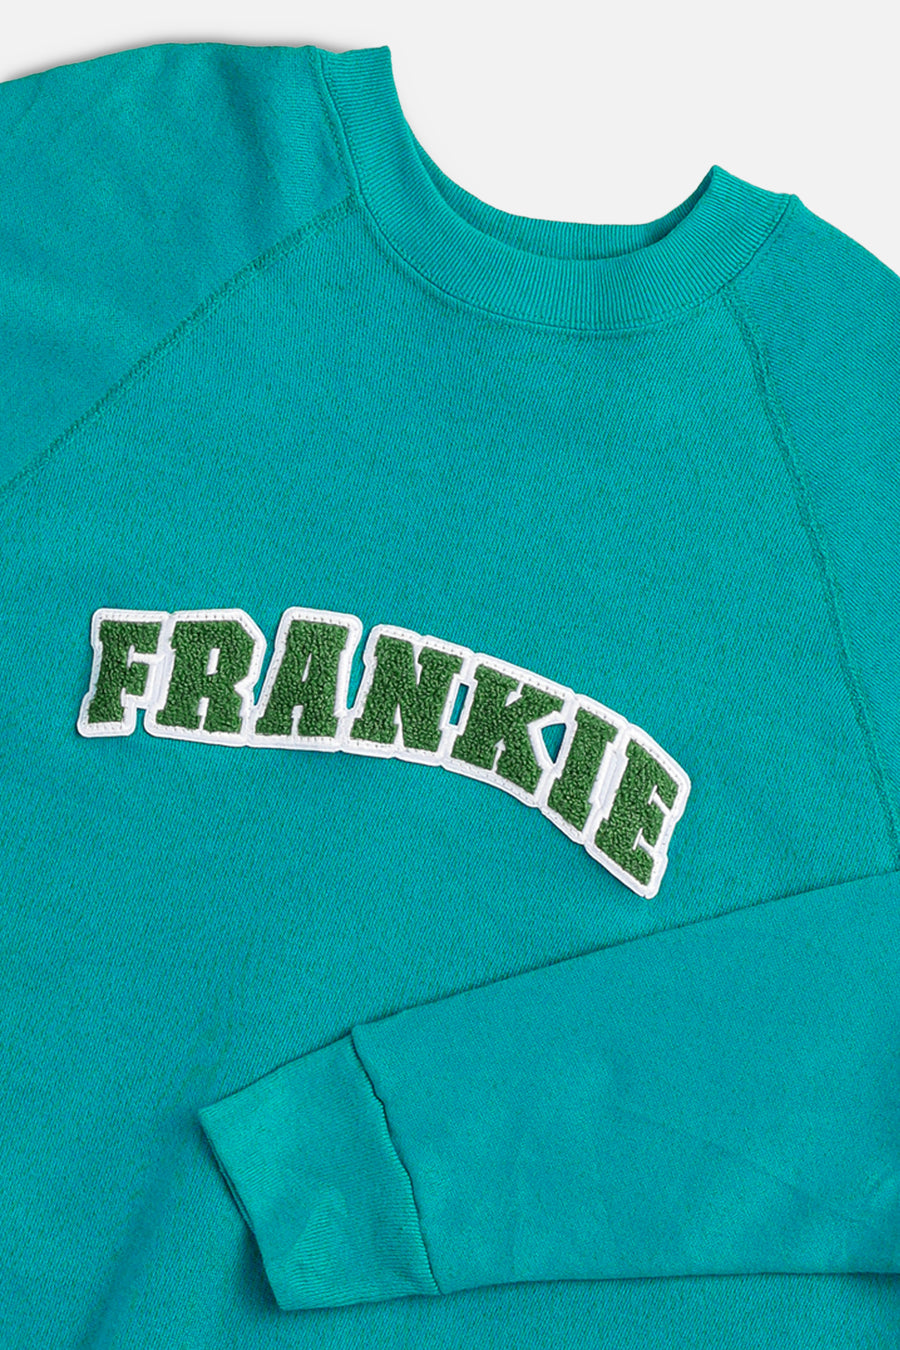 Frankie Upcycled Varsity Sweatshirt - M